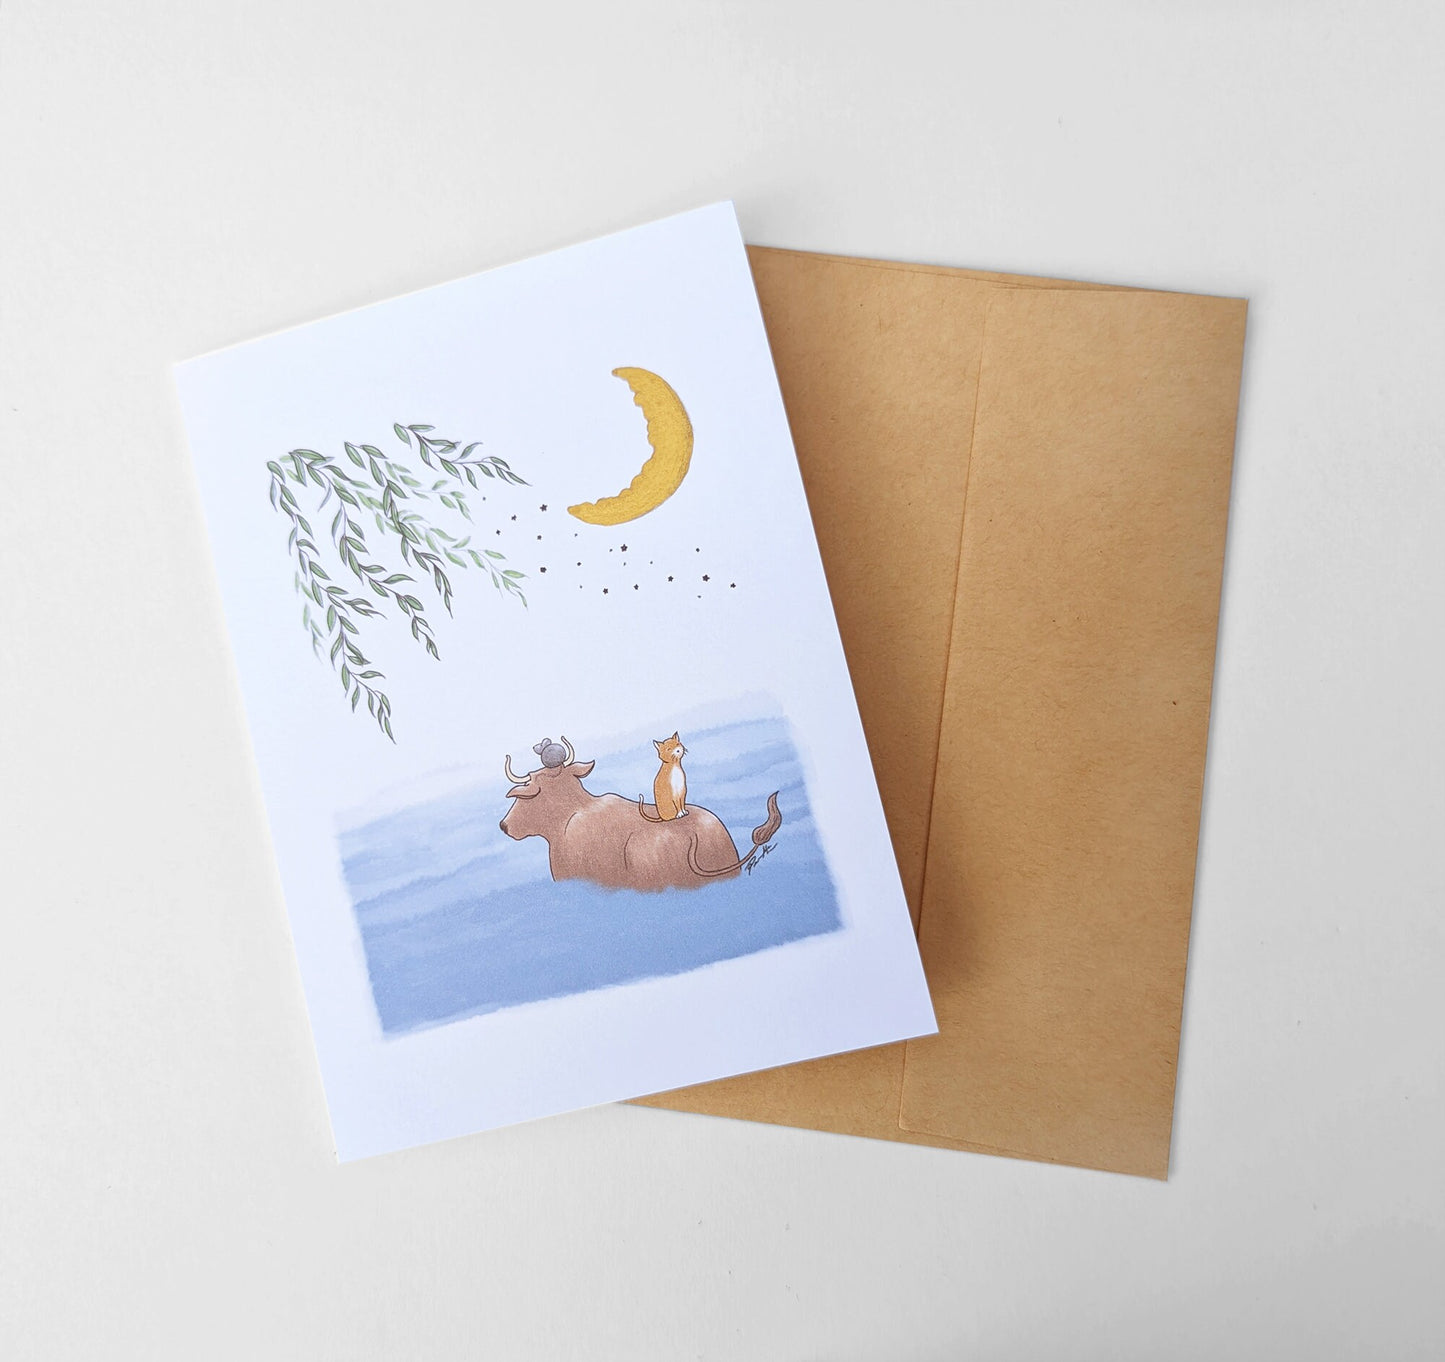 Ox Butt Greeting Card - Lunar Zodiac Series